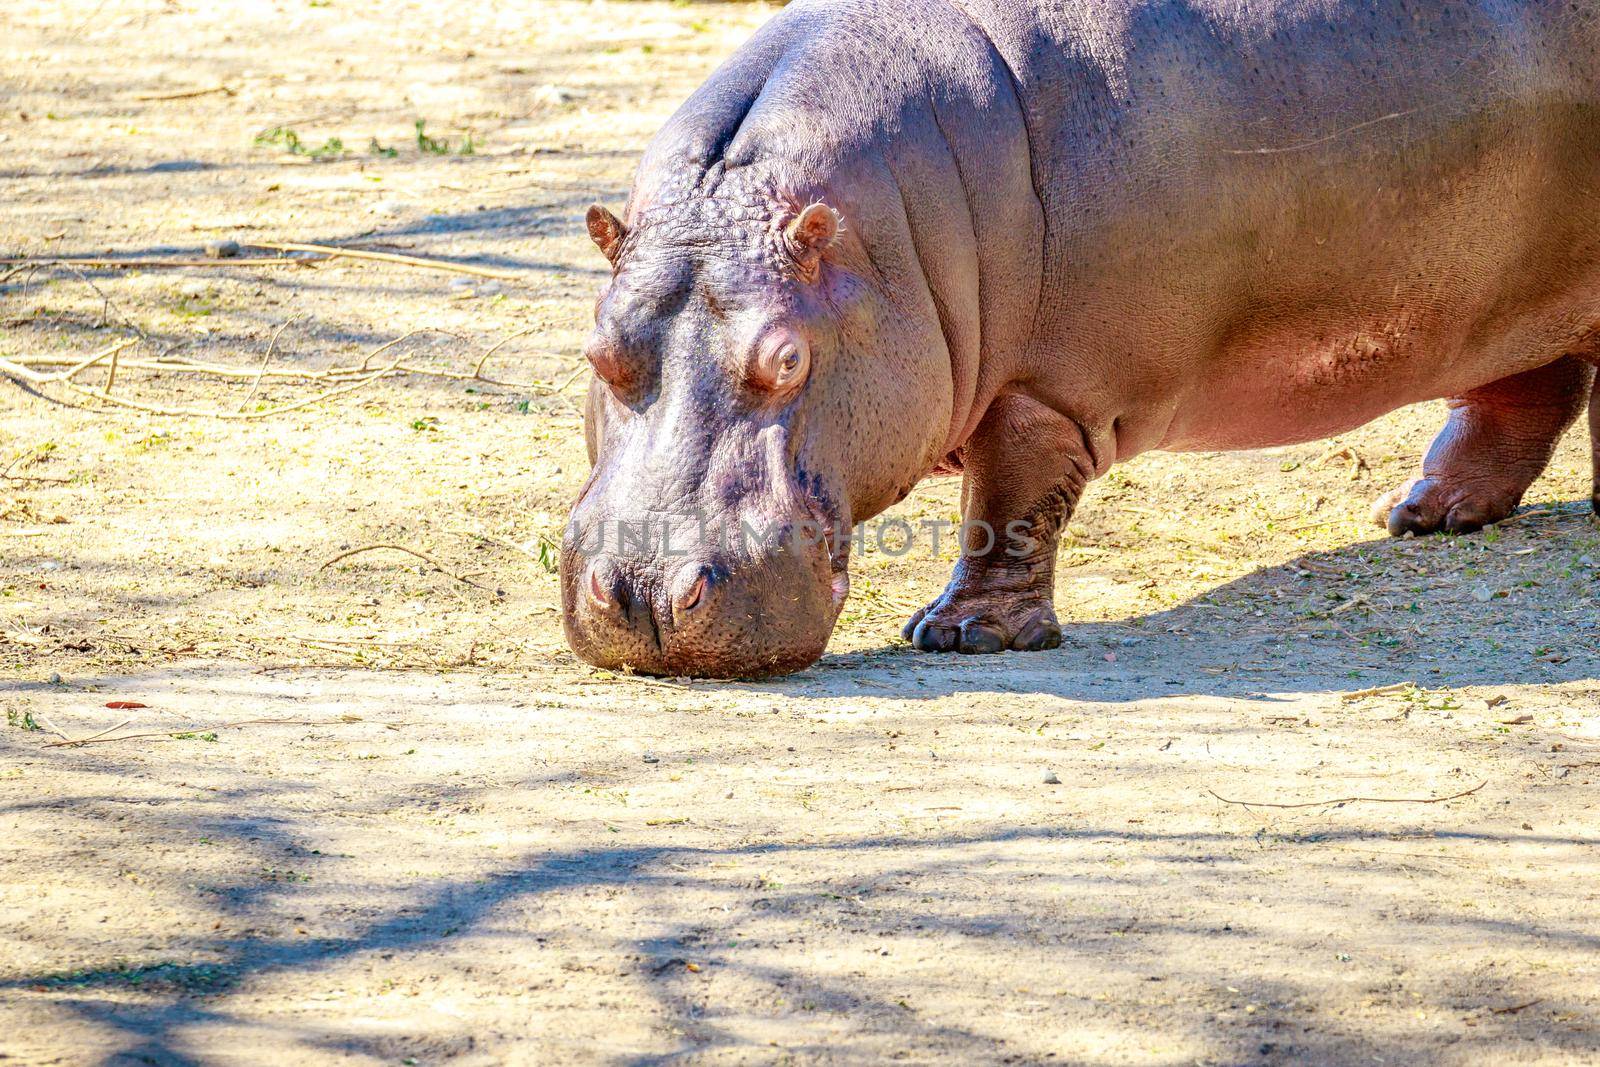 A Hippopotamus walks on the dry land.